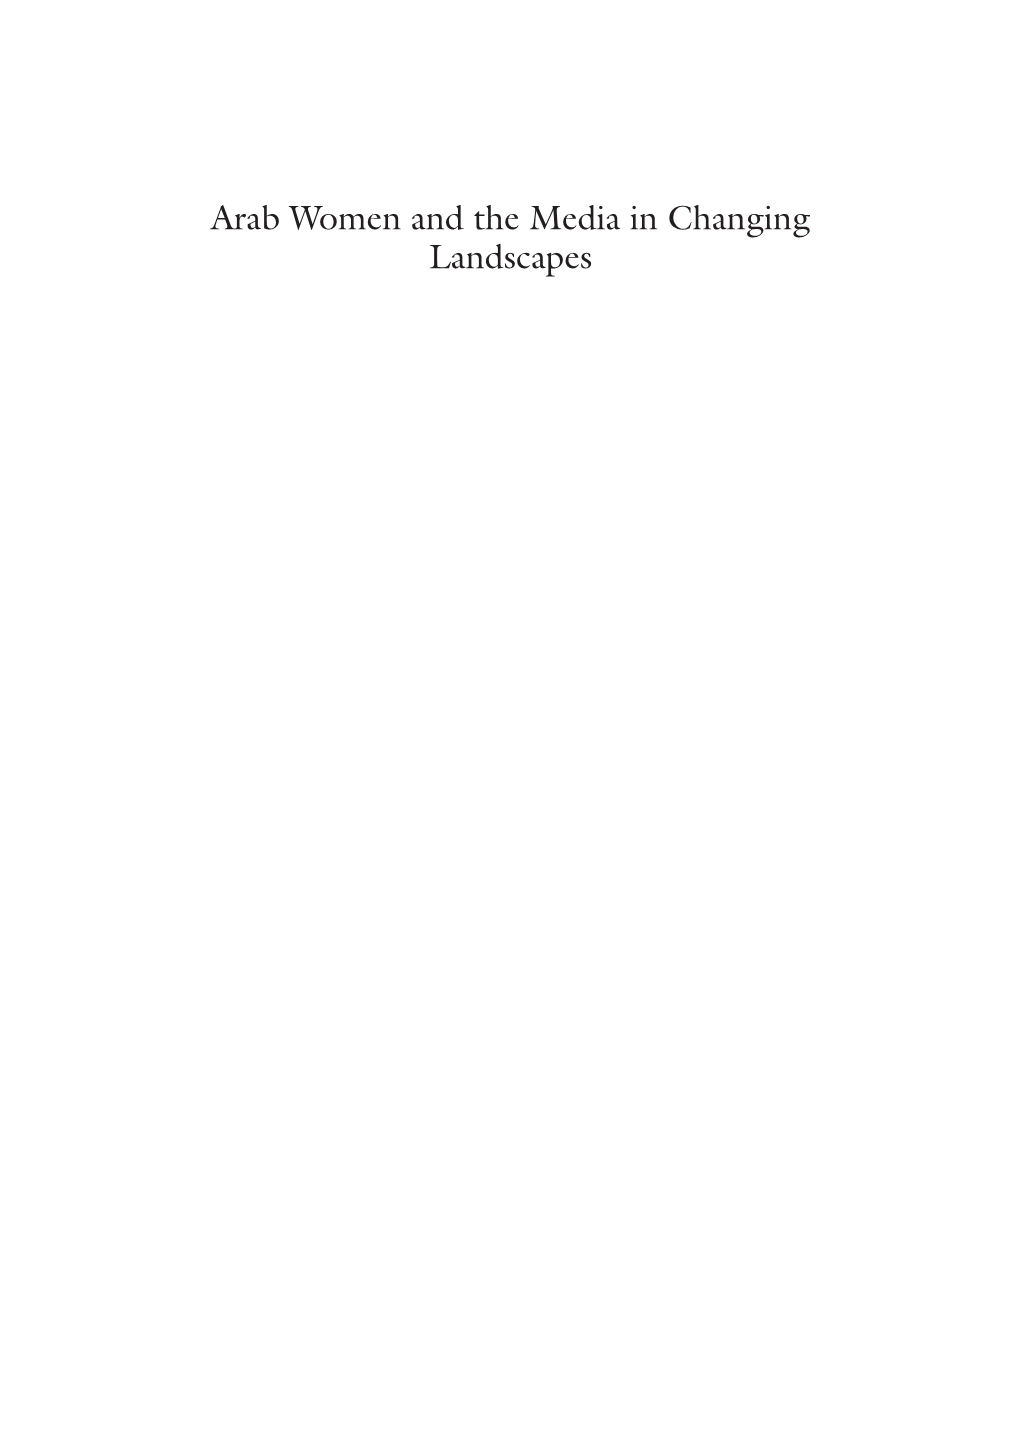 Arab Women and the Media in Changing Landscapes Elena Maestri · Annemarie Profanter Editors Arab Women and the Media in Changing Landscapes